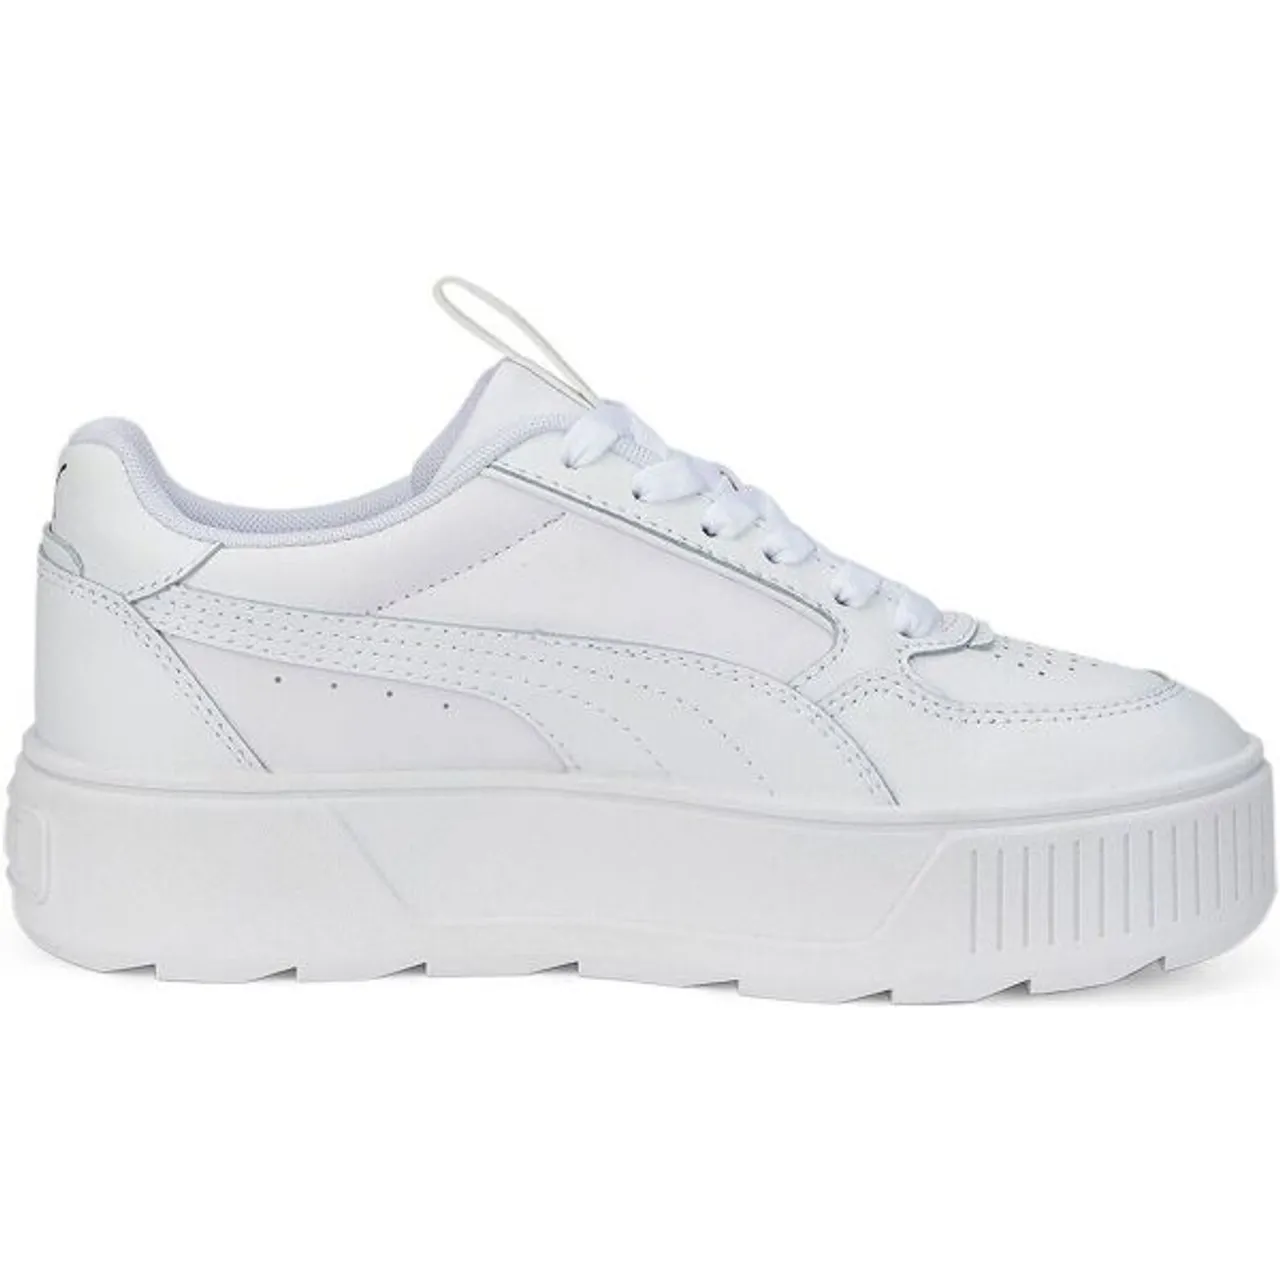 Sneaker PUMA "KARMEN REBELLE" Gr. 42, weiß (puma white, puma white) Schuhe Sneaker